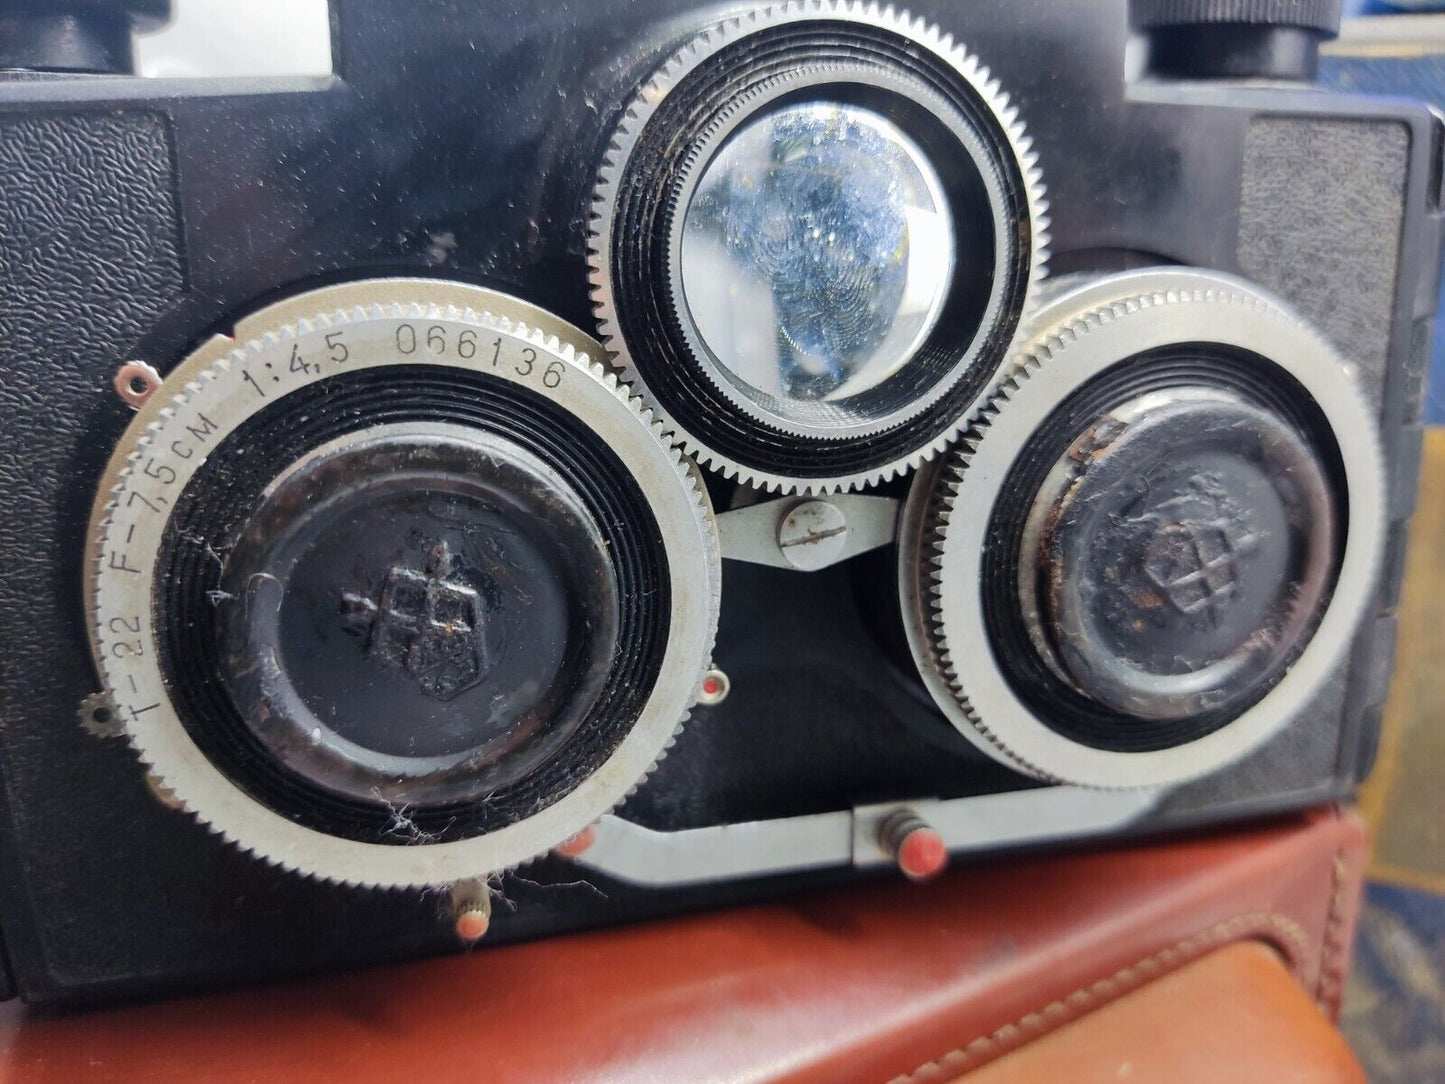 Sputnik + Stereo Kit FULL SET Stereoscopic 6x6 TLR Twin Lens Reflex Lomo Camera very rare